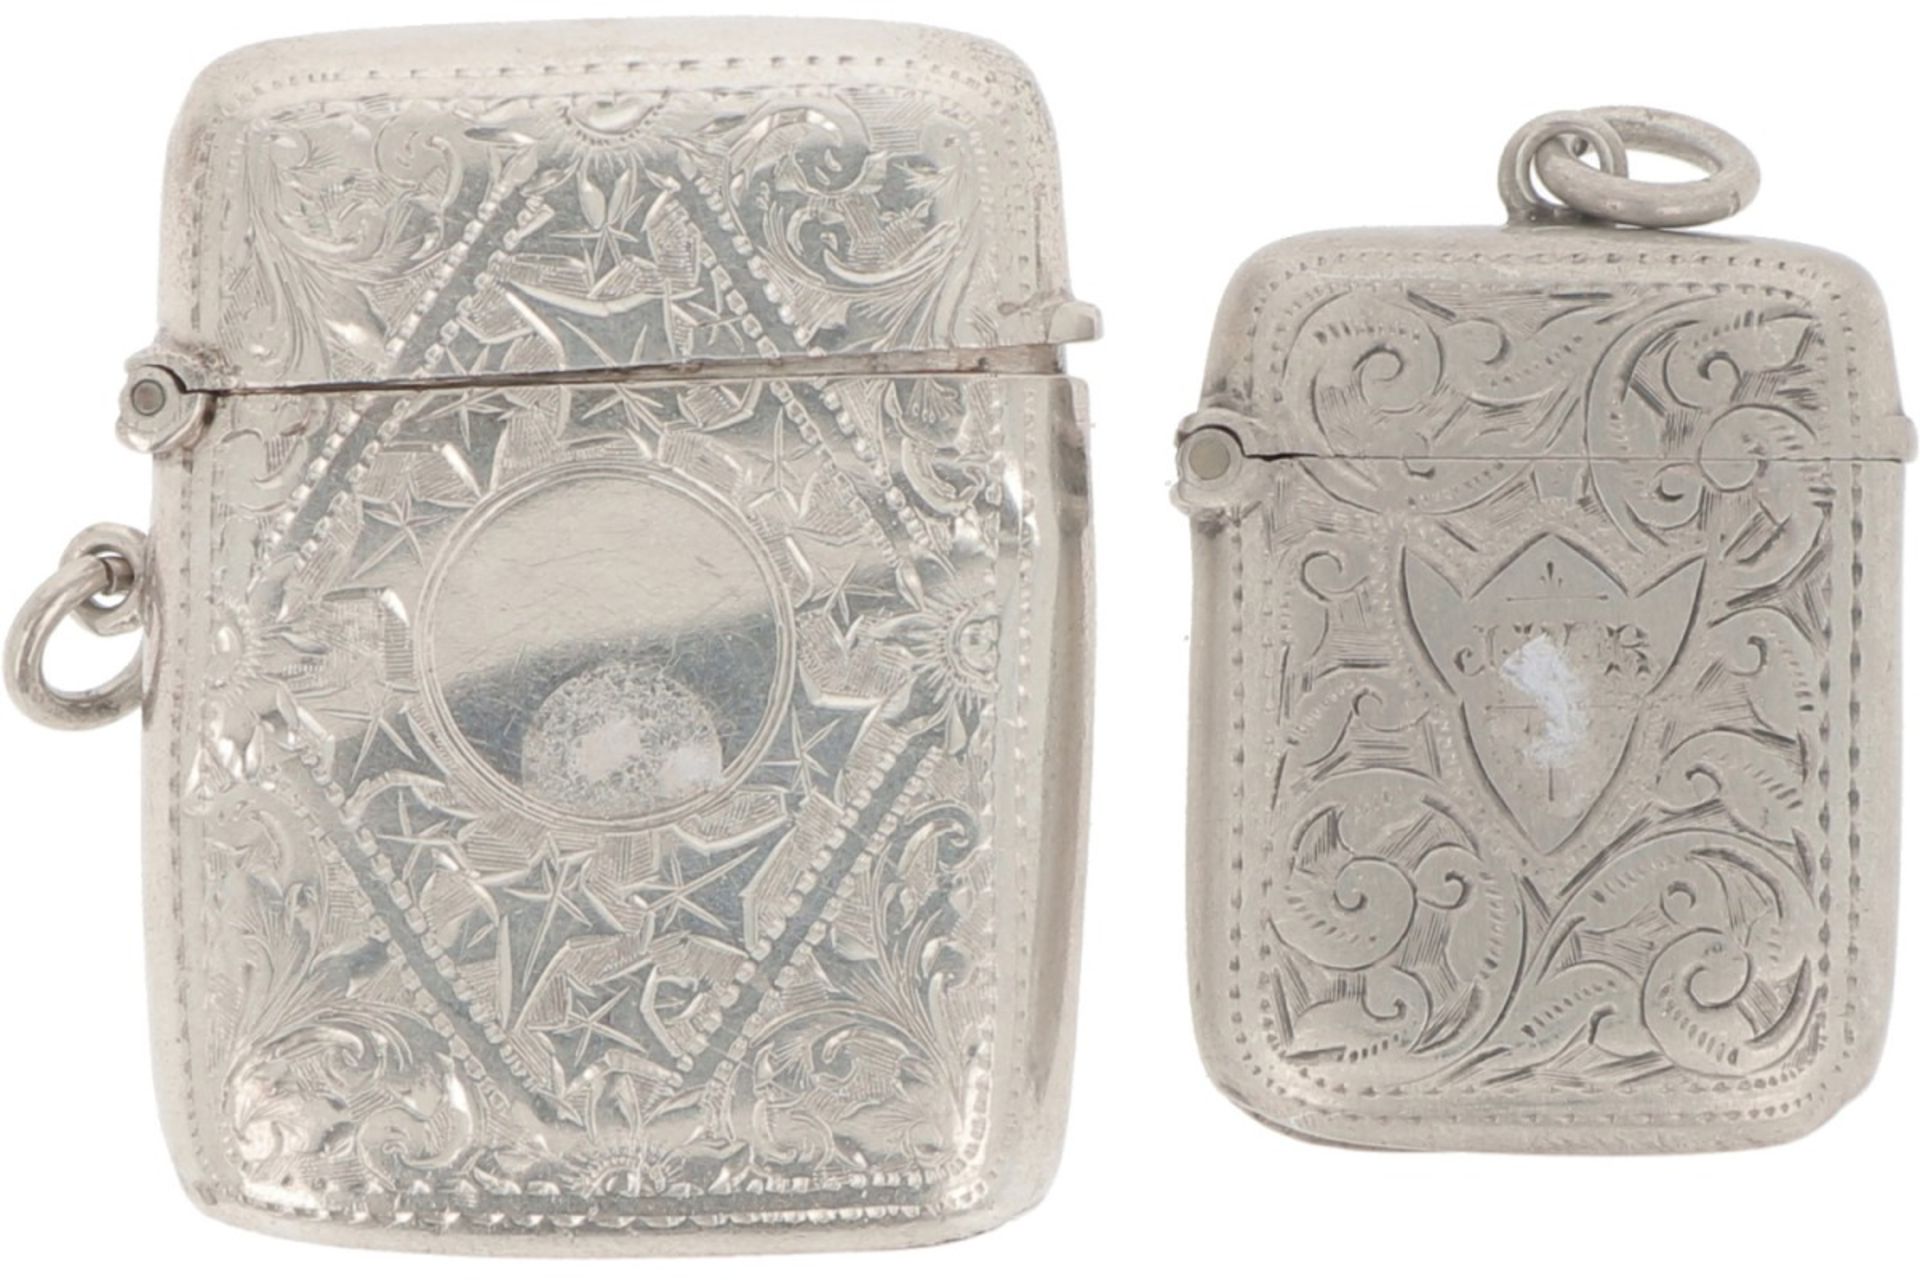 (2) piece lot of Vesta case / Tinder boxes silver.